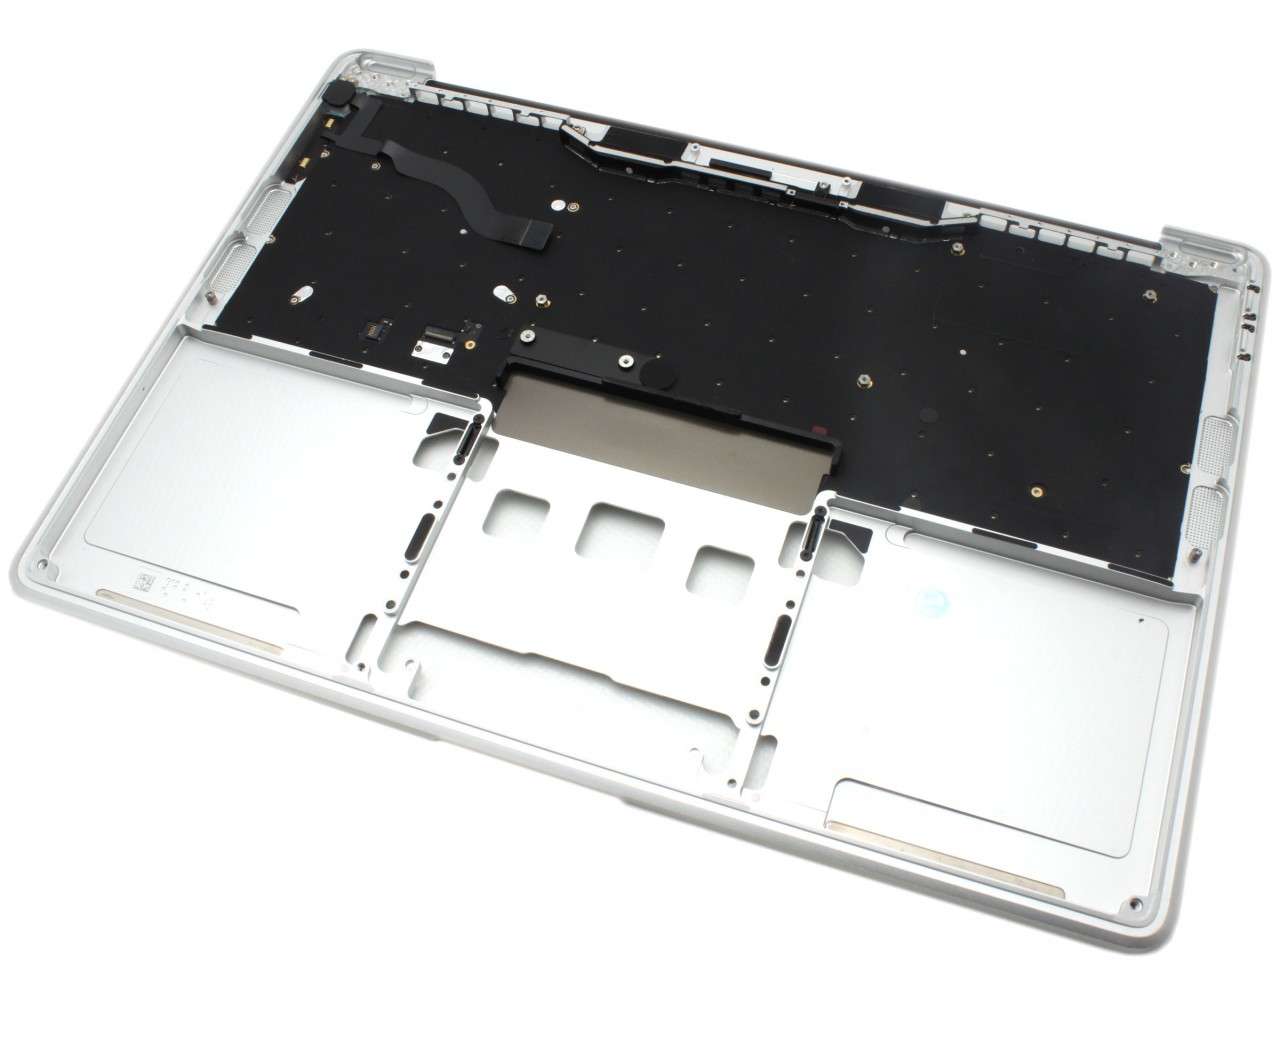 Tastatura Apple MacBook Pro Retina 13 A1708 Mid 2017 Neagra cu Palmrest Argintiu 2017 imagine Black Friday 2021